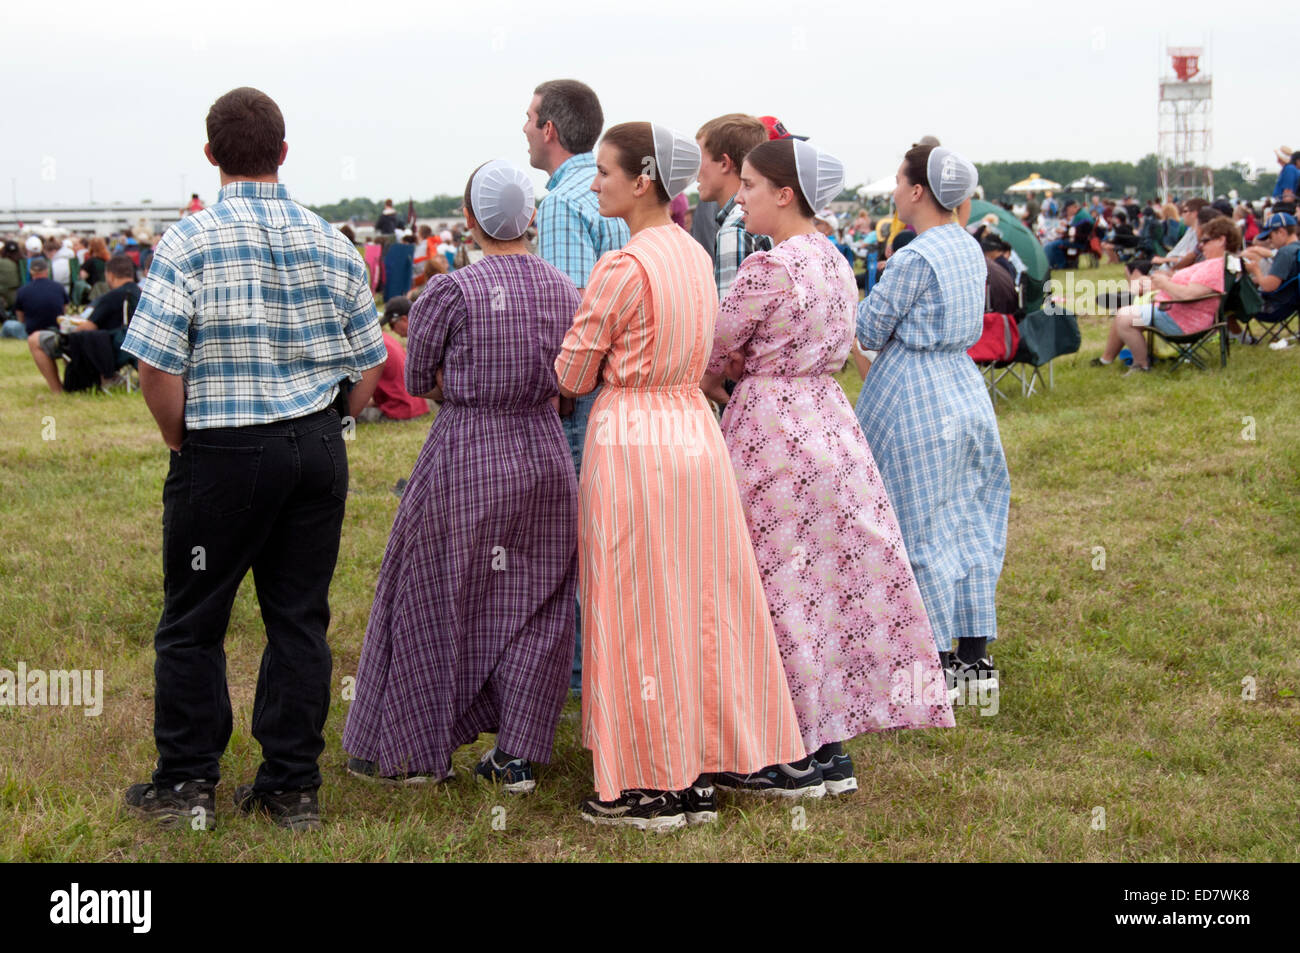 Amish teenagers at airshow. Stock Photo